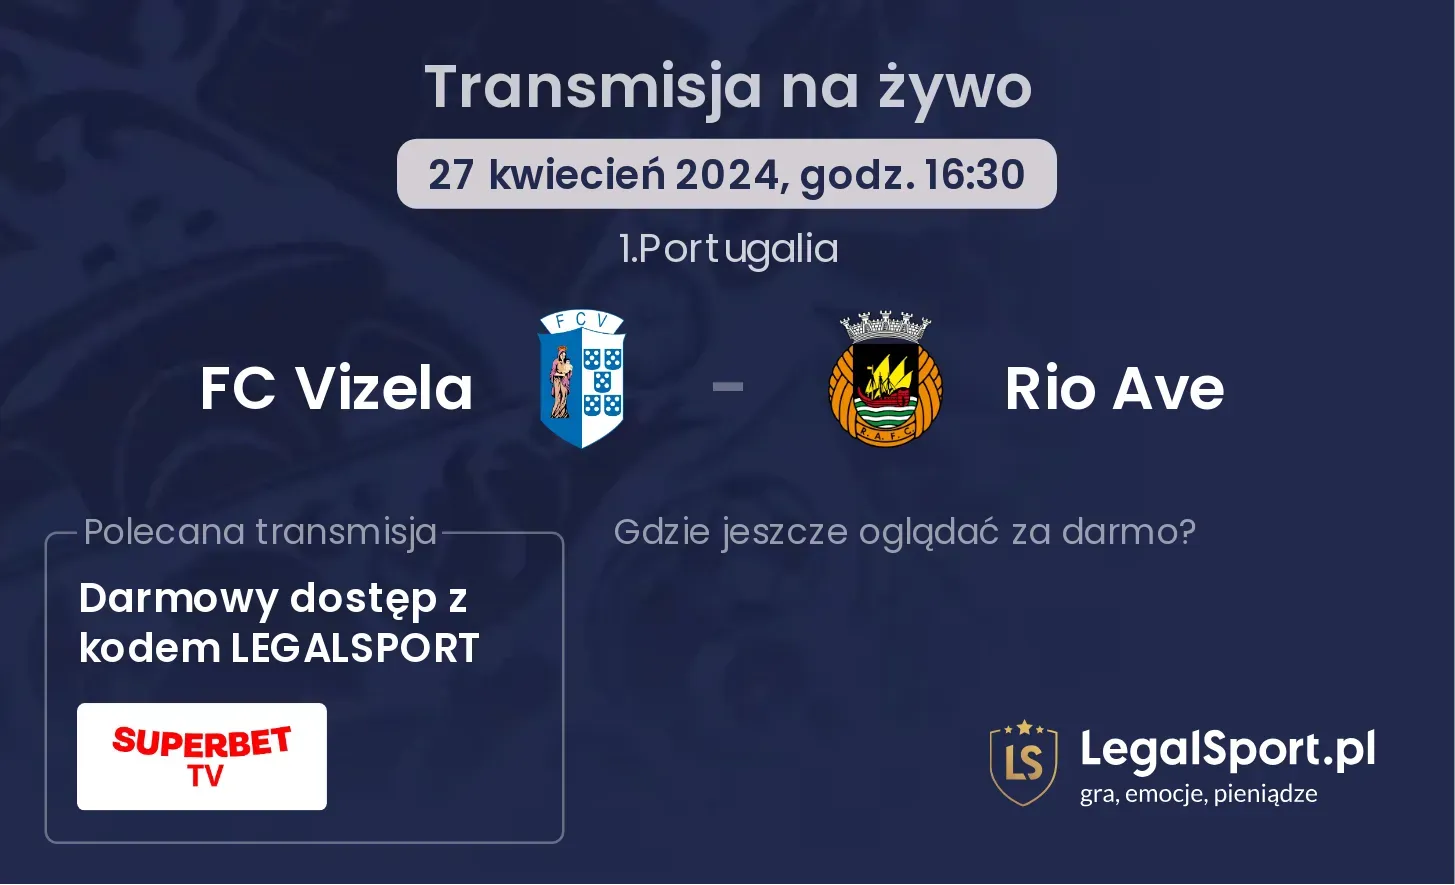 FC Vizela - Rio Ave transmisja na żywo